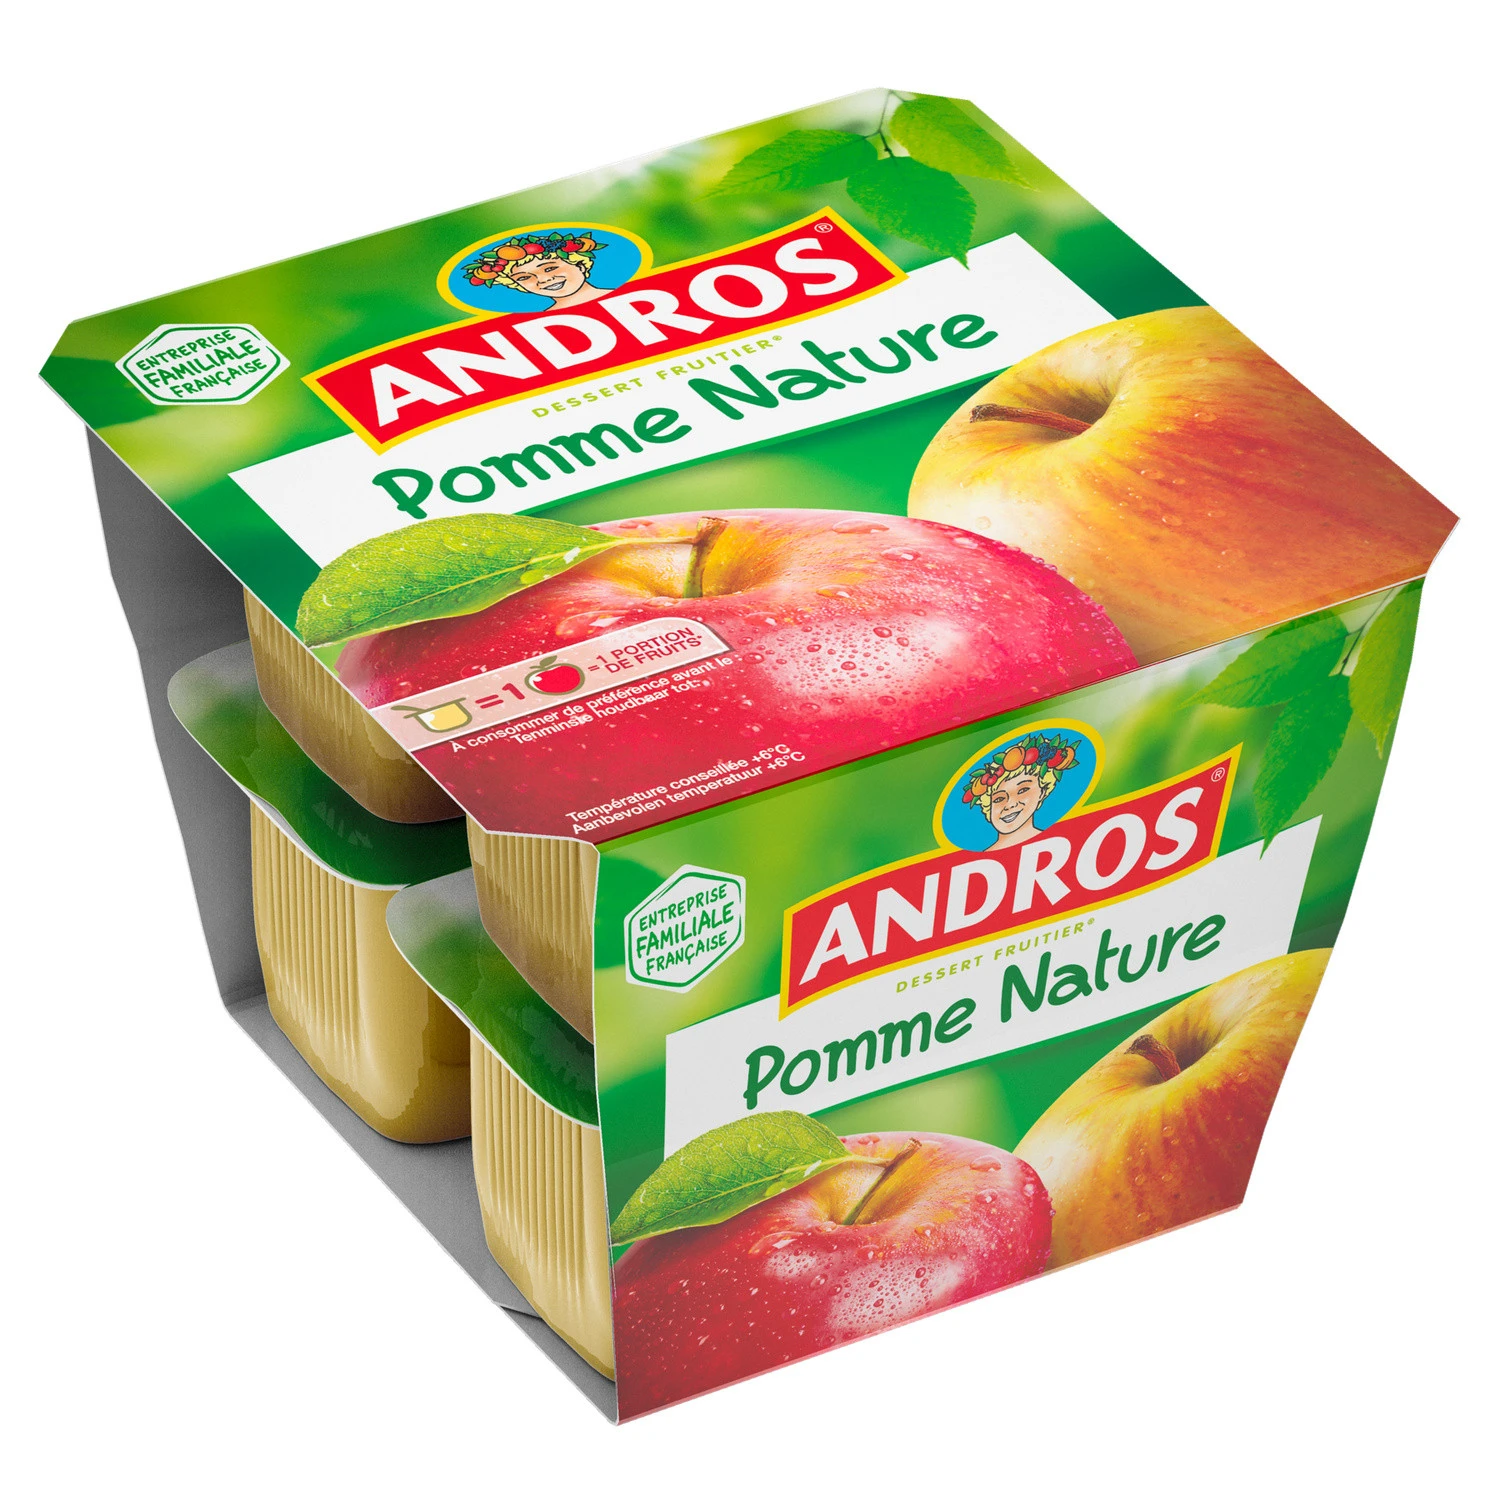 Andros Plain apple dessert 8x100g